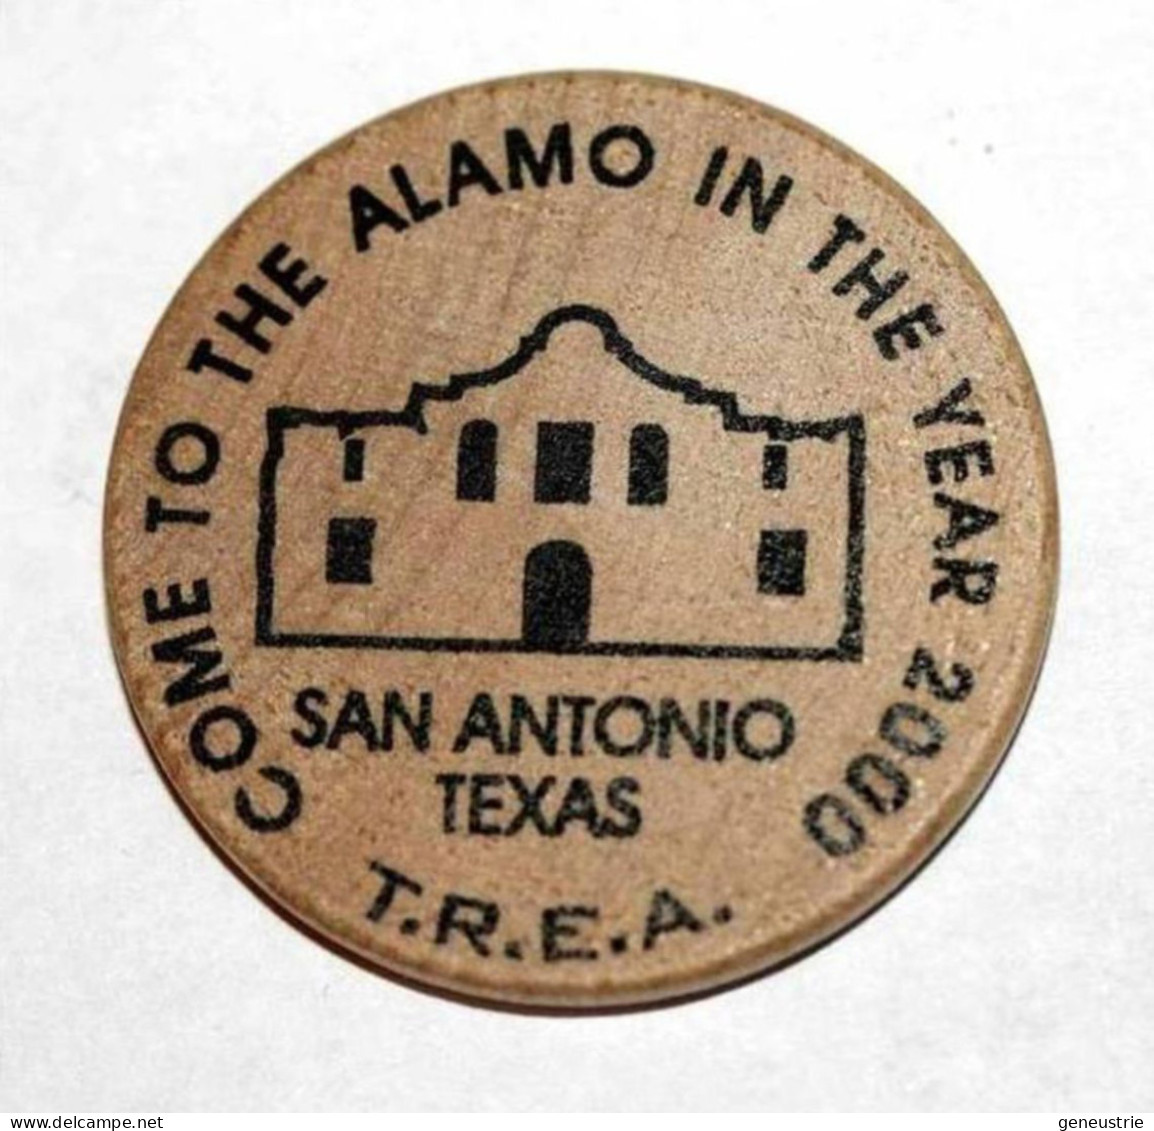 Wooden Token - Wooden Nickel - Jeton Bois Monnaie Nécessité - Texas San Antonio - Fort Alamo 2000 - Etats-Unis - Notgeld